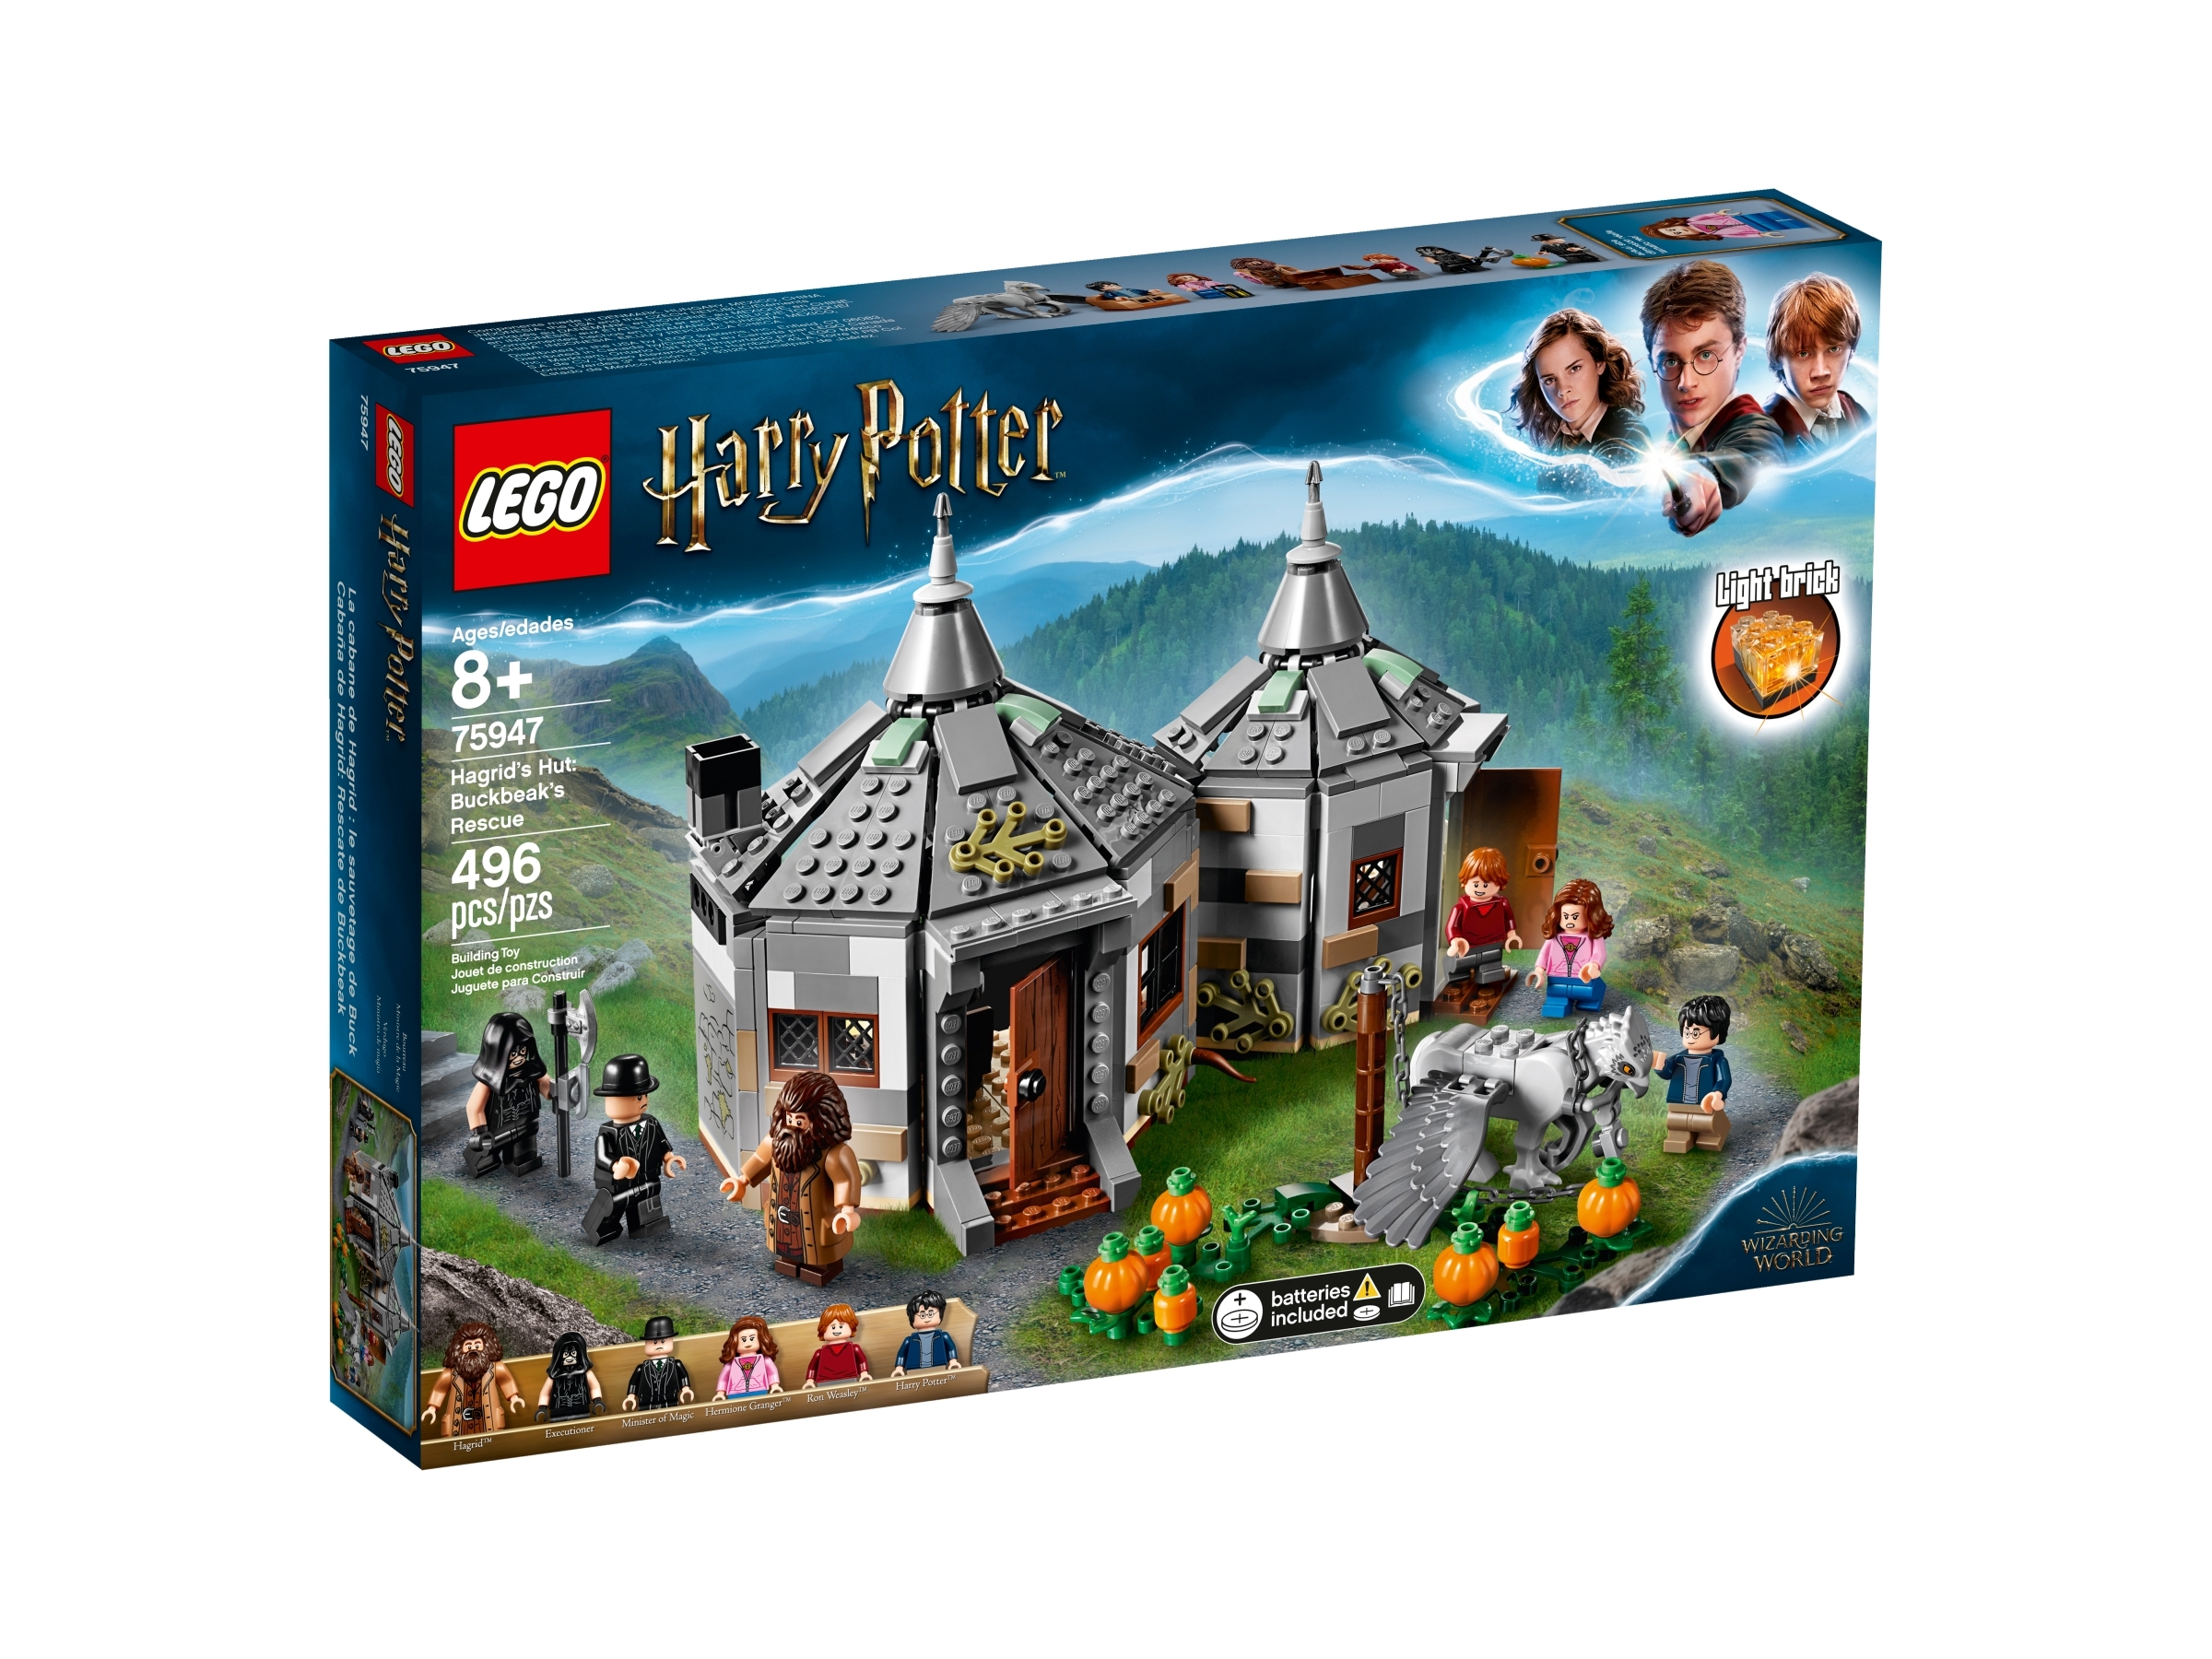 LEGO Harry Potter Hagrids Hut 496 Pieces Buckbeaks Rescue 75947 Toy Hut Building Set from The Prisoner of Azkaban Features Buckbeak The Hippogriff Figure